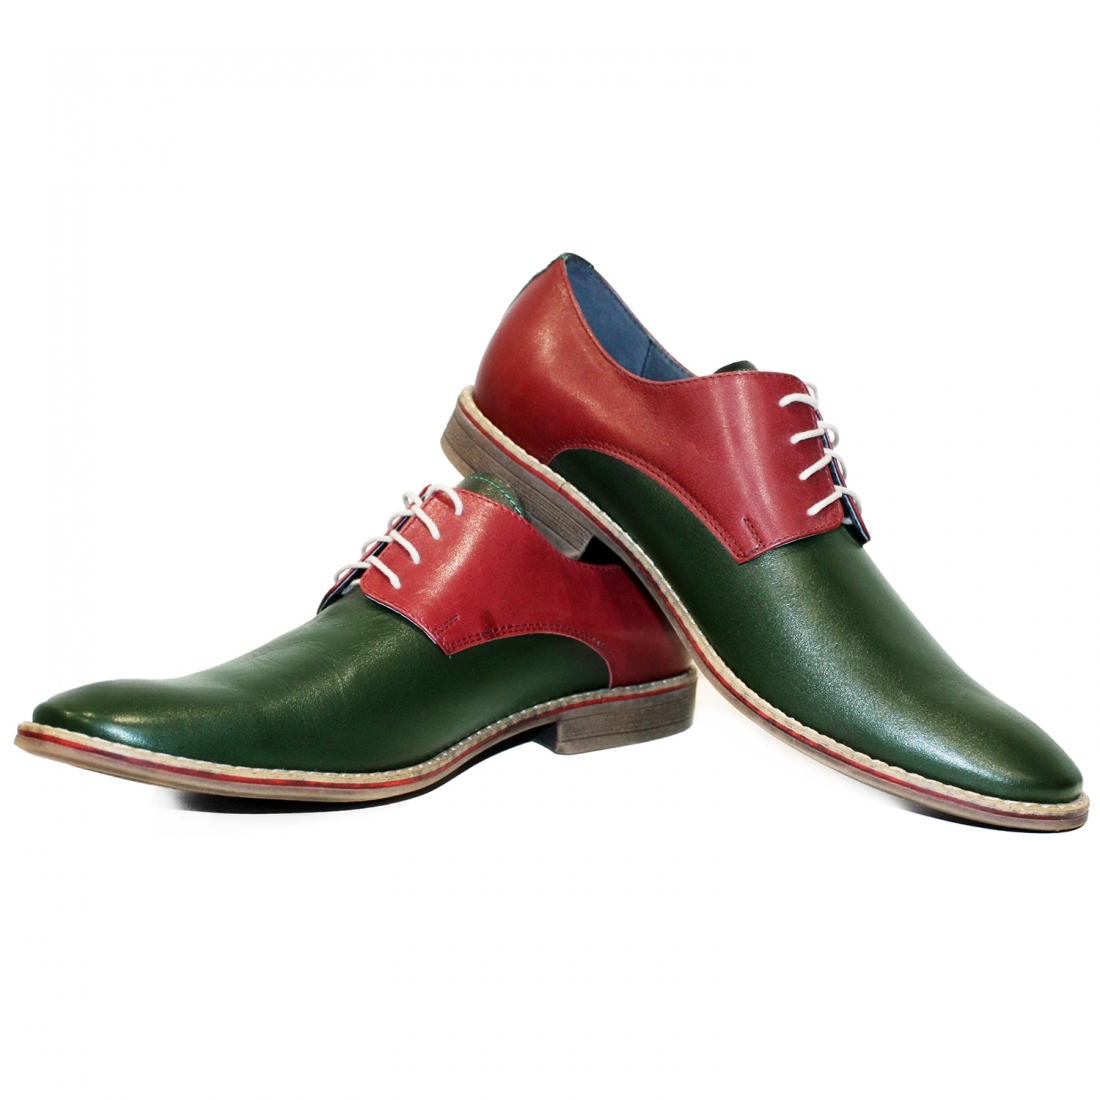 Modello Huterso - Классическая обувь - Handmade Colorful Italian Leather Shoes